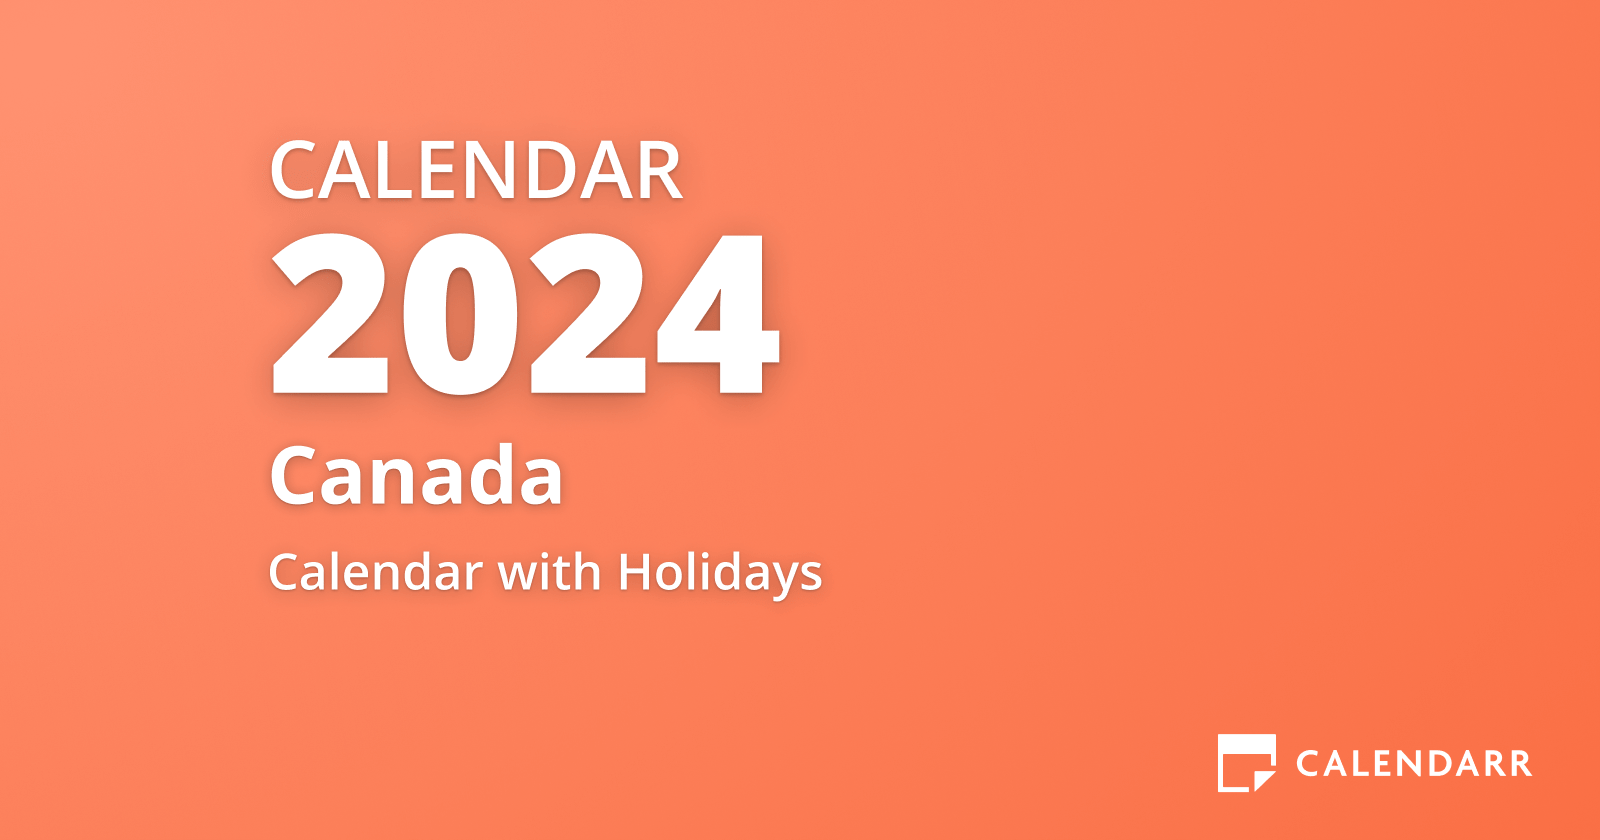 February 2024 Calendar of Canada (February 2024 Holidays and